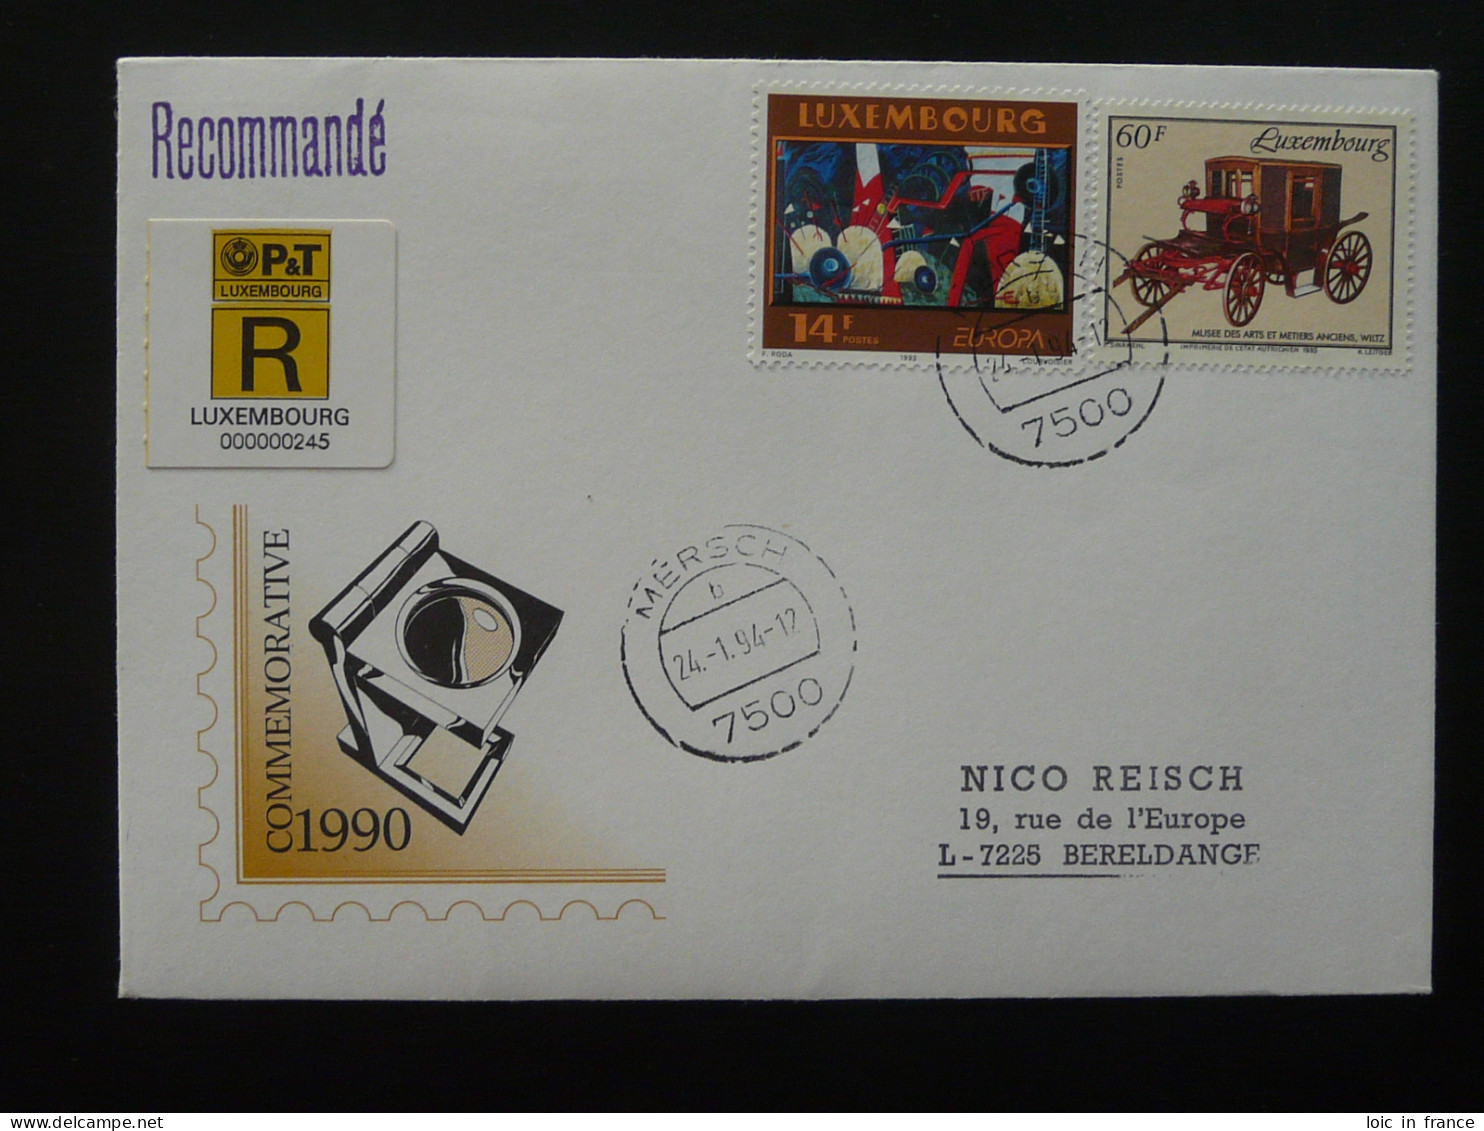 Lettre Recommandée Registered Cover Mersch Luxembourg 1994 - Storia Postale